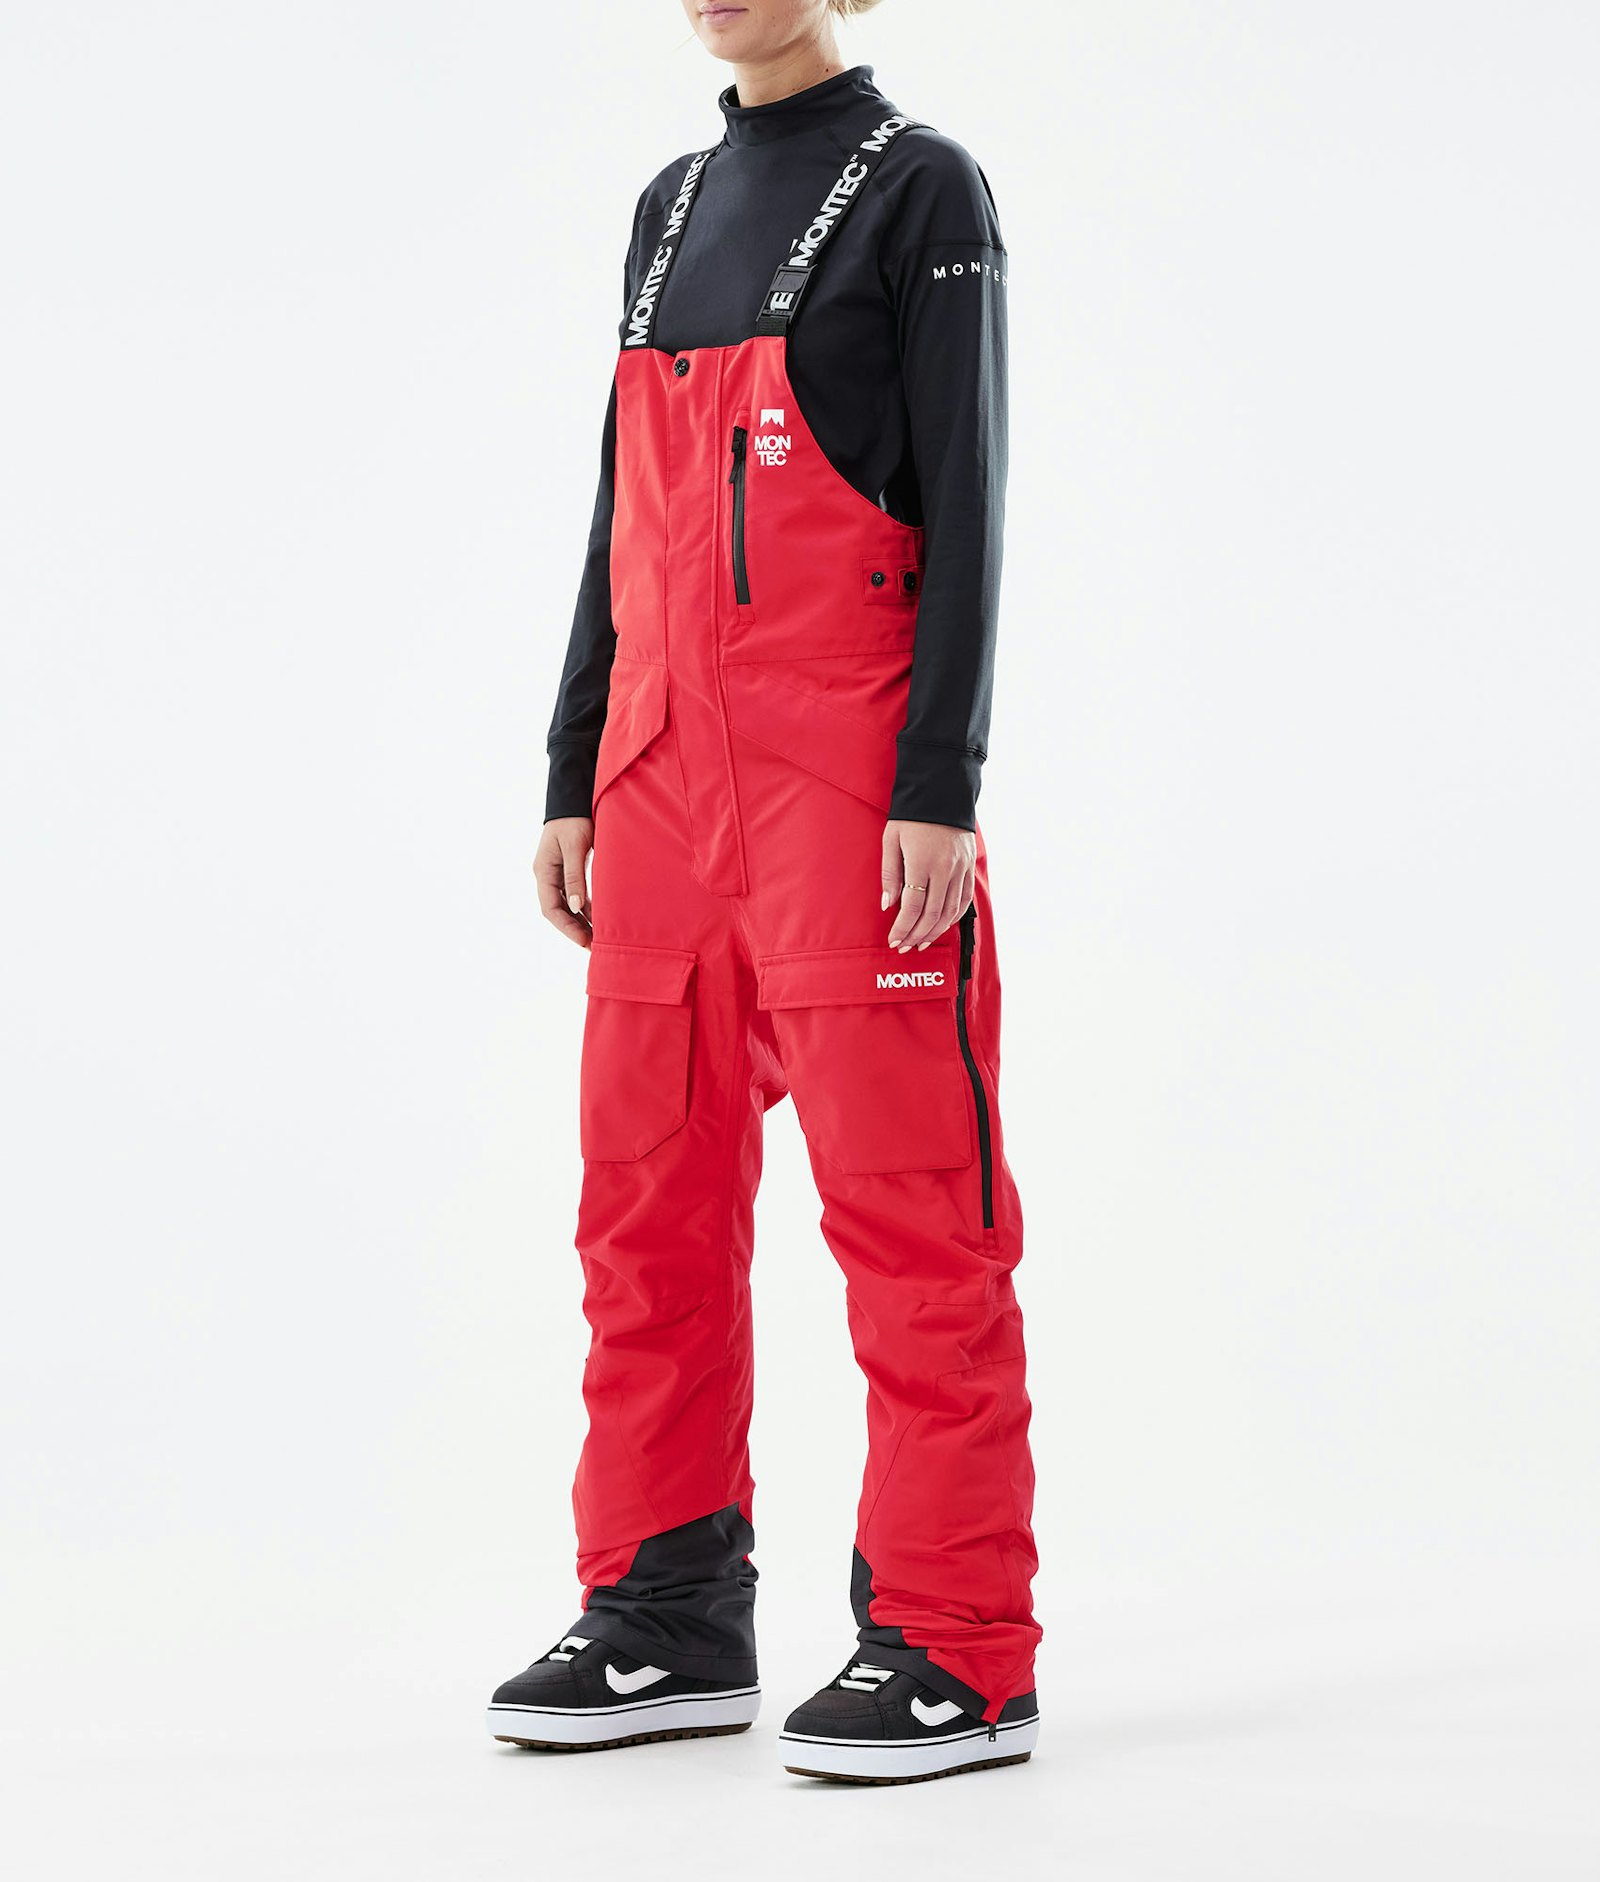 Montec Fawk W 2021 Snowboardhose Damen Red